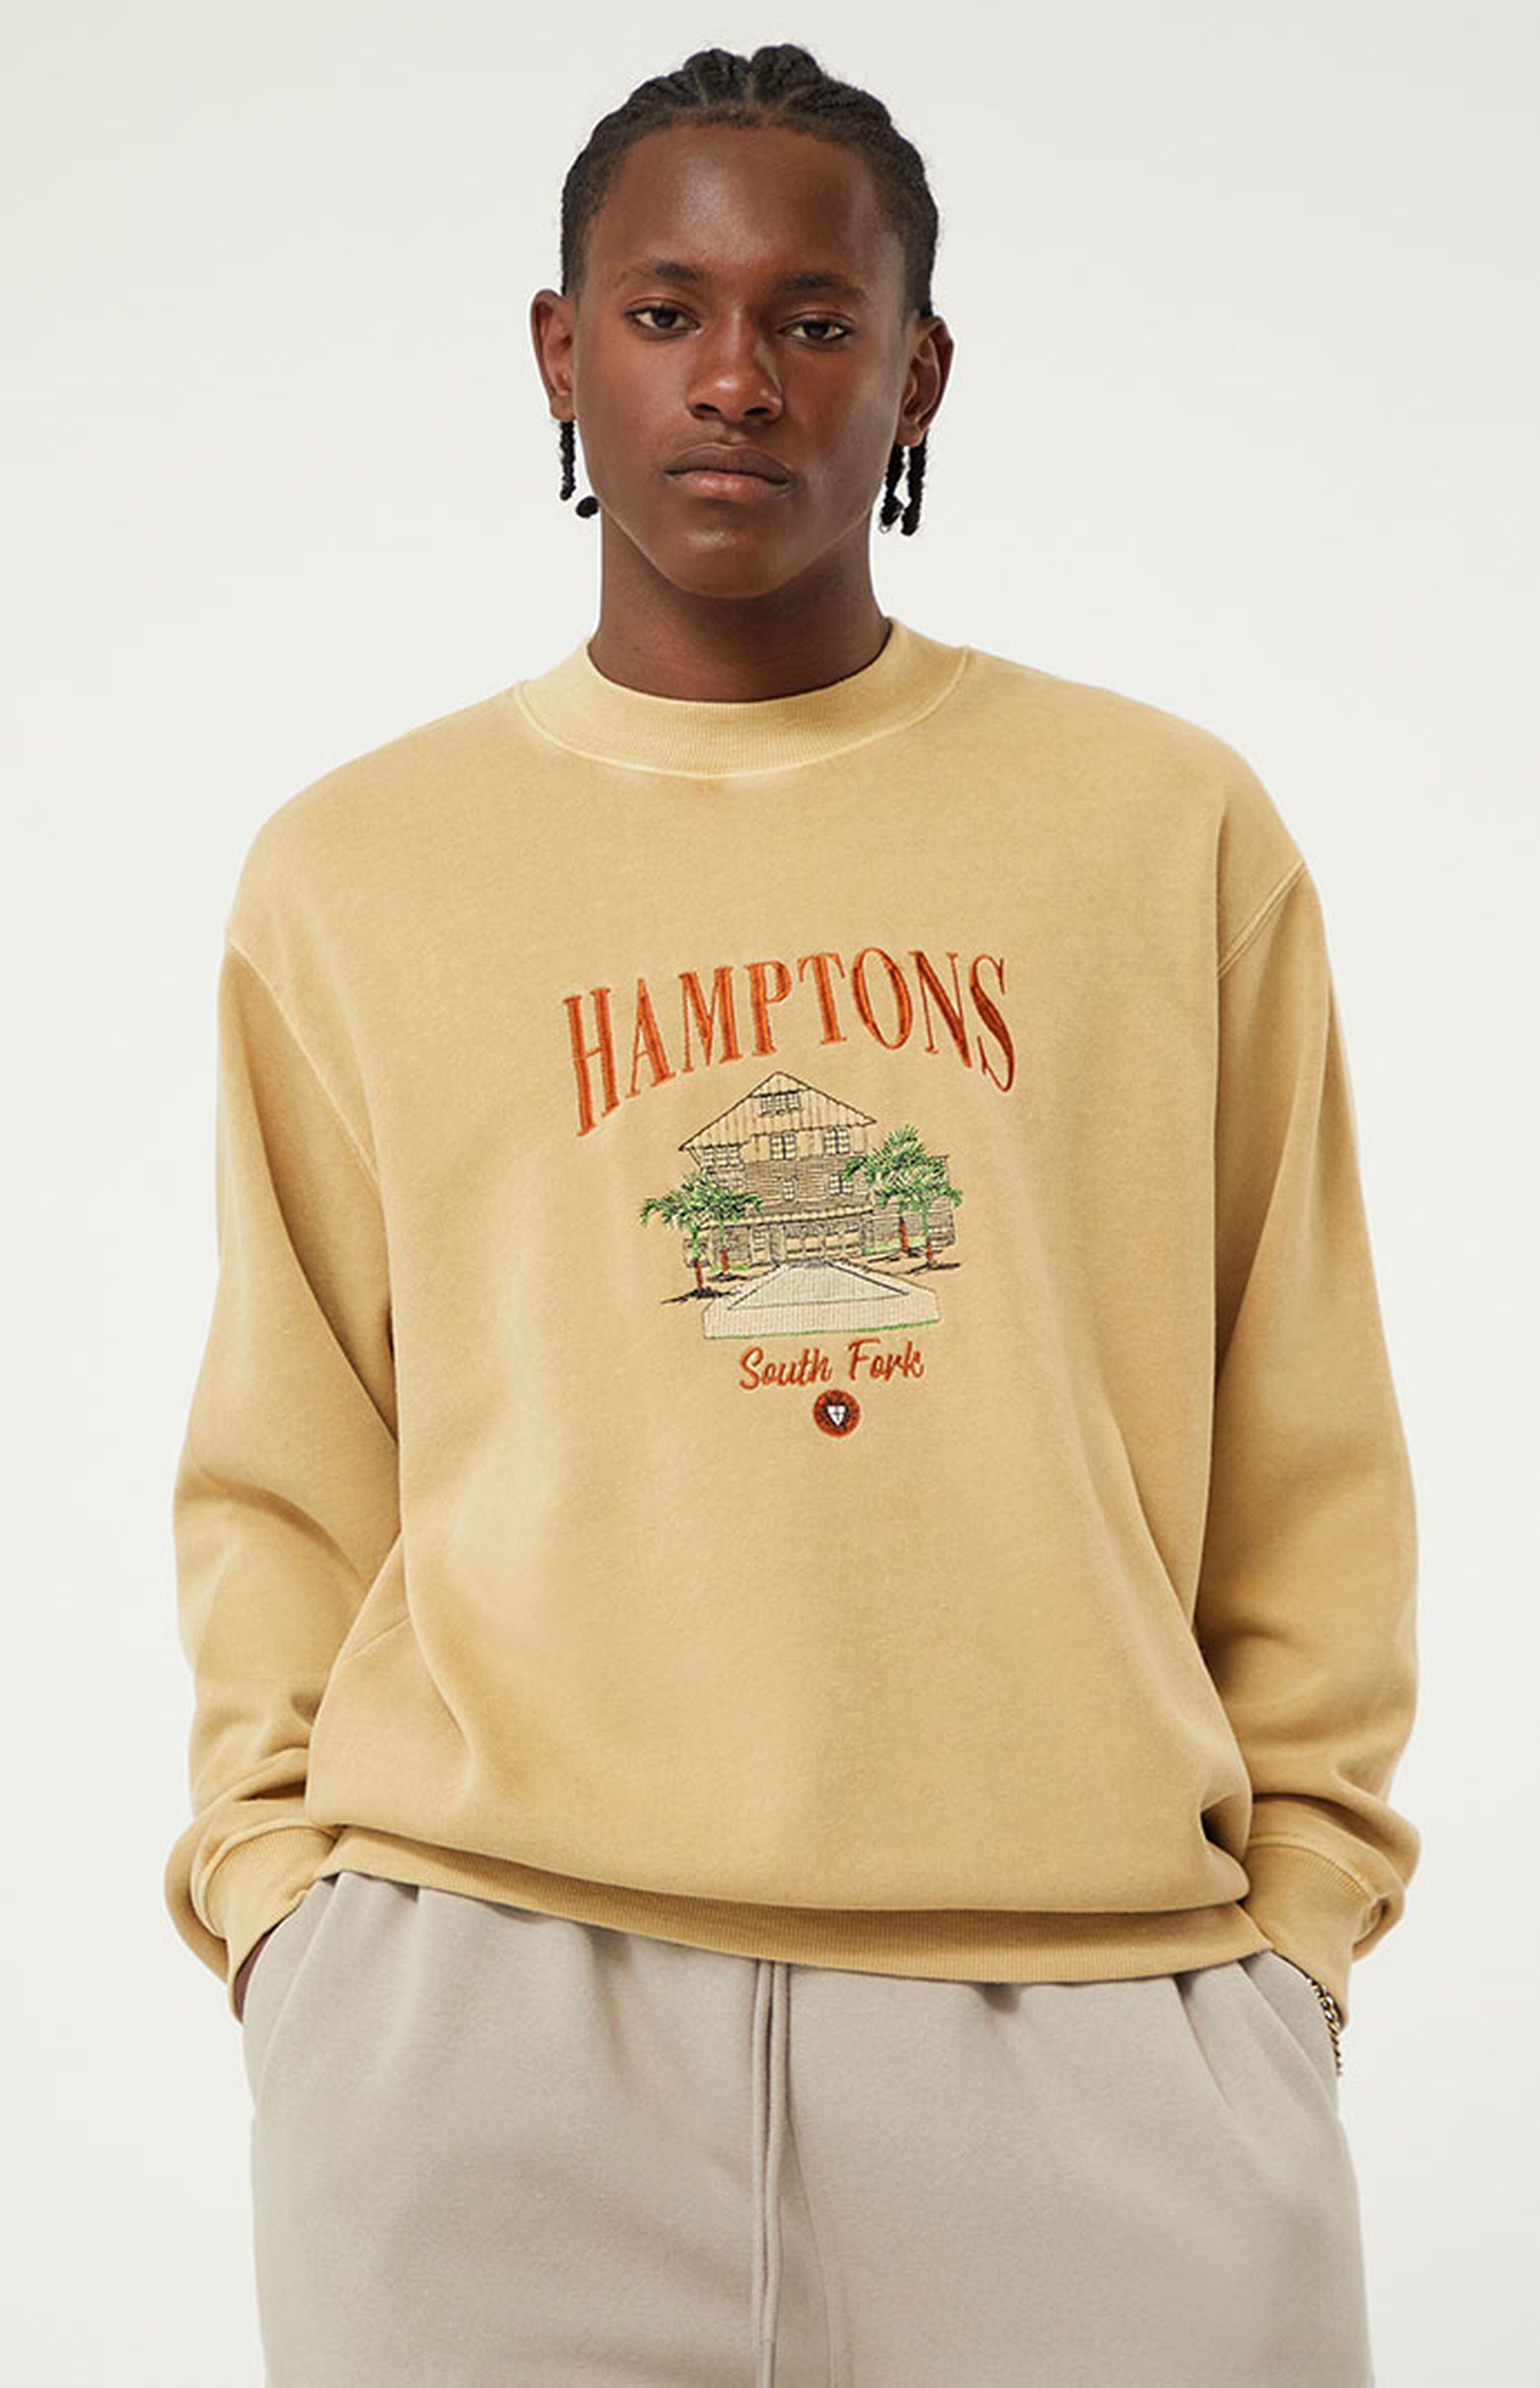 PacSun Hamptons Vintage Crew Neck Sweatshirt | PacSun